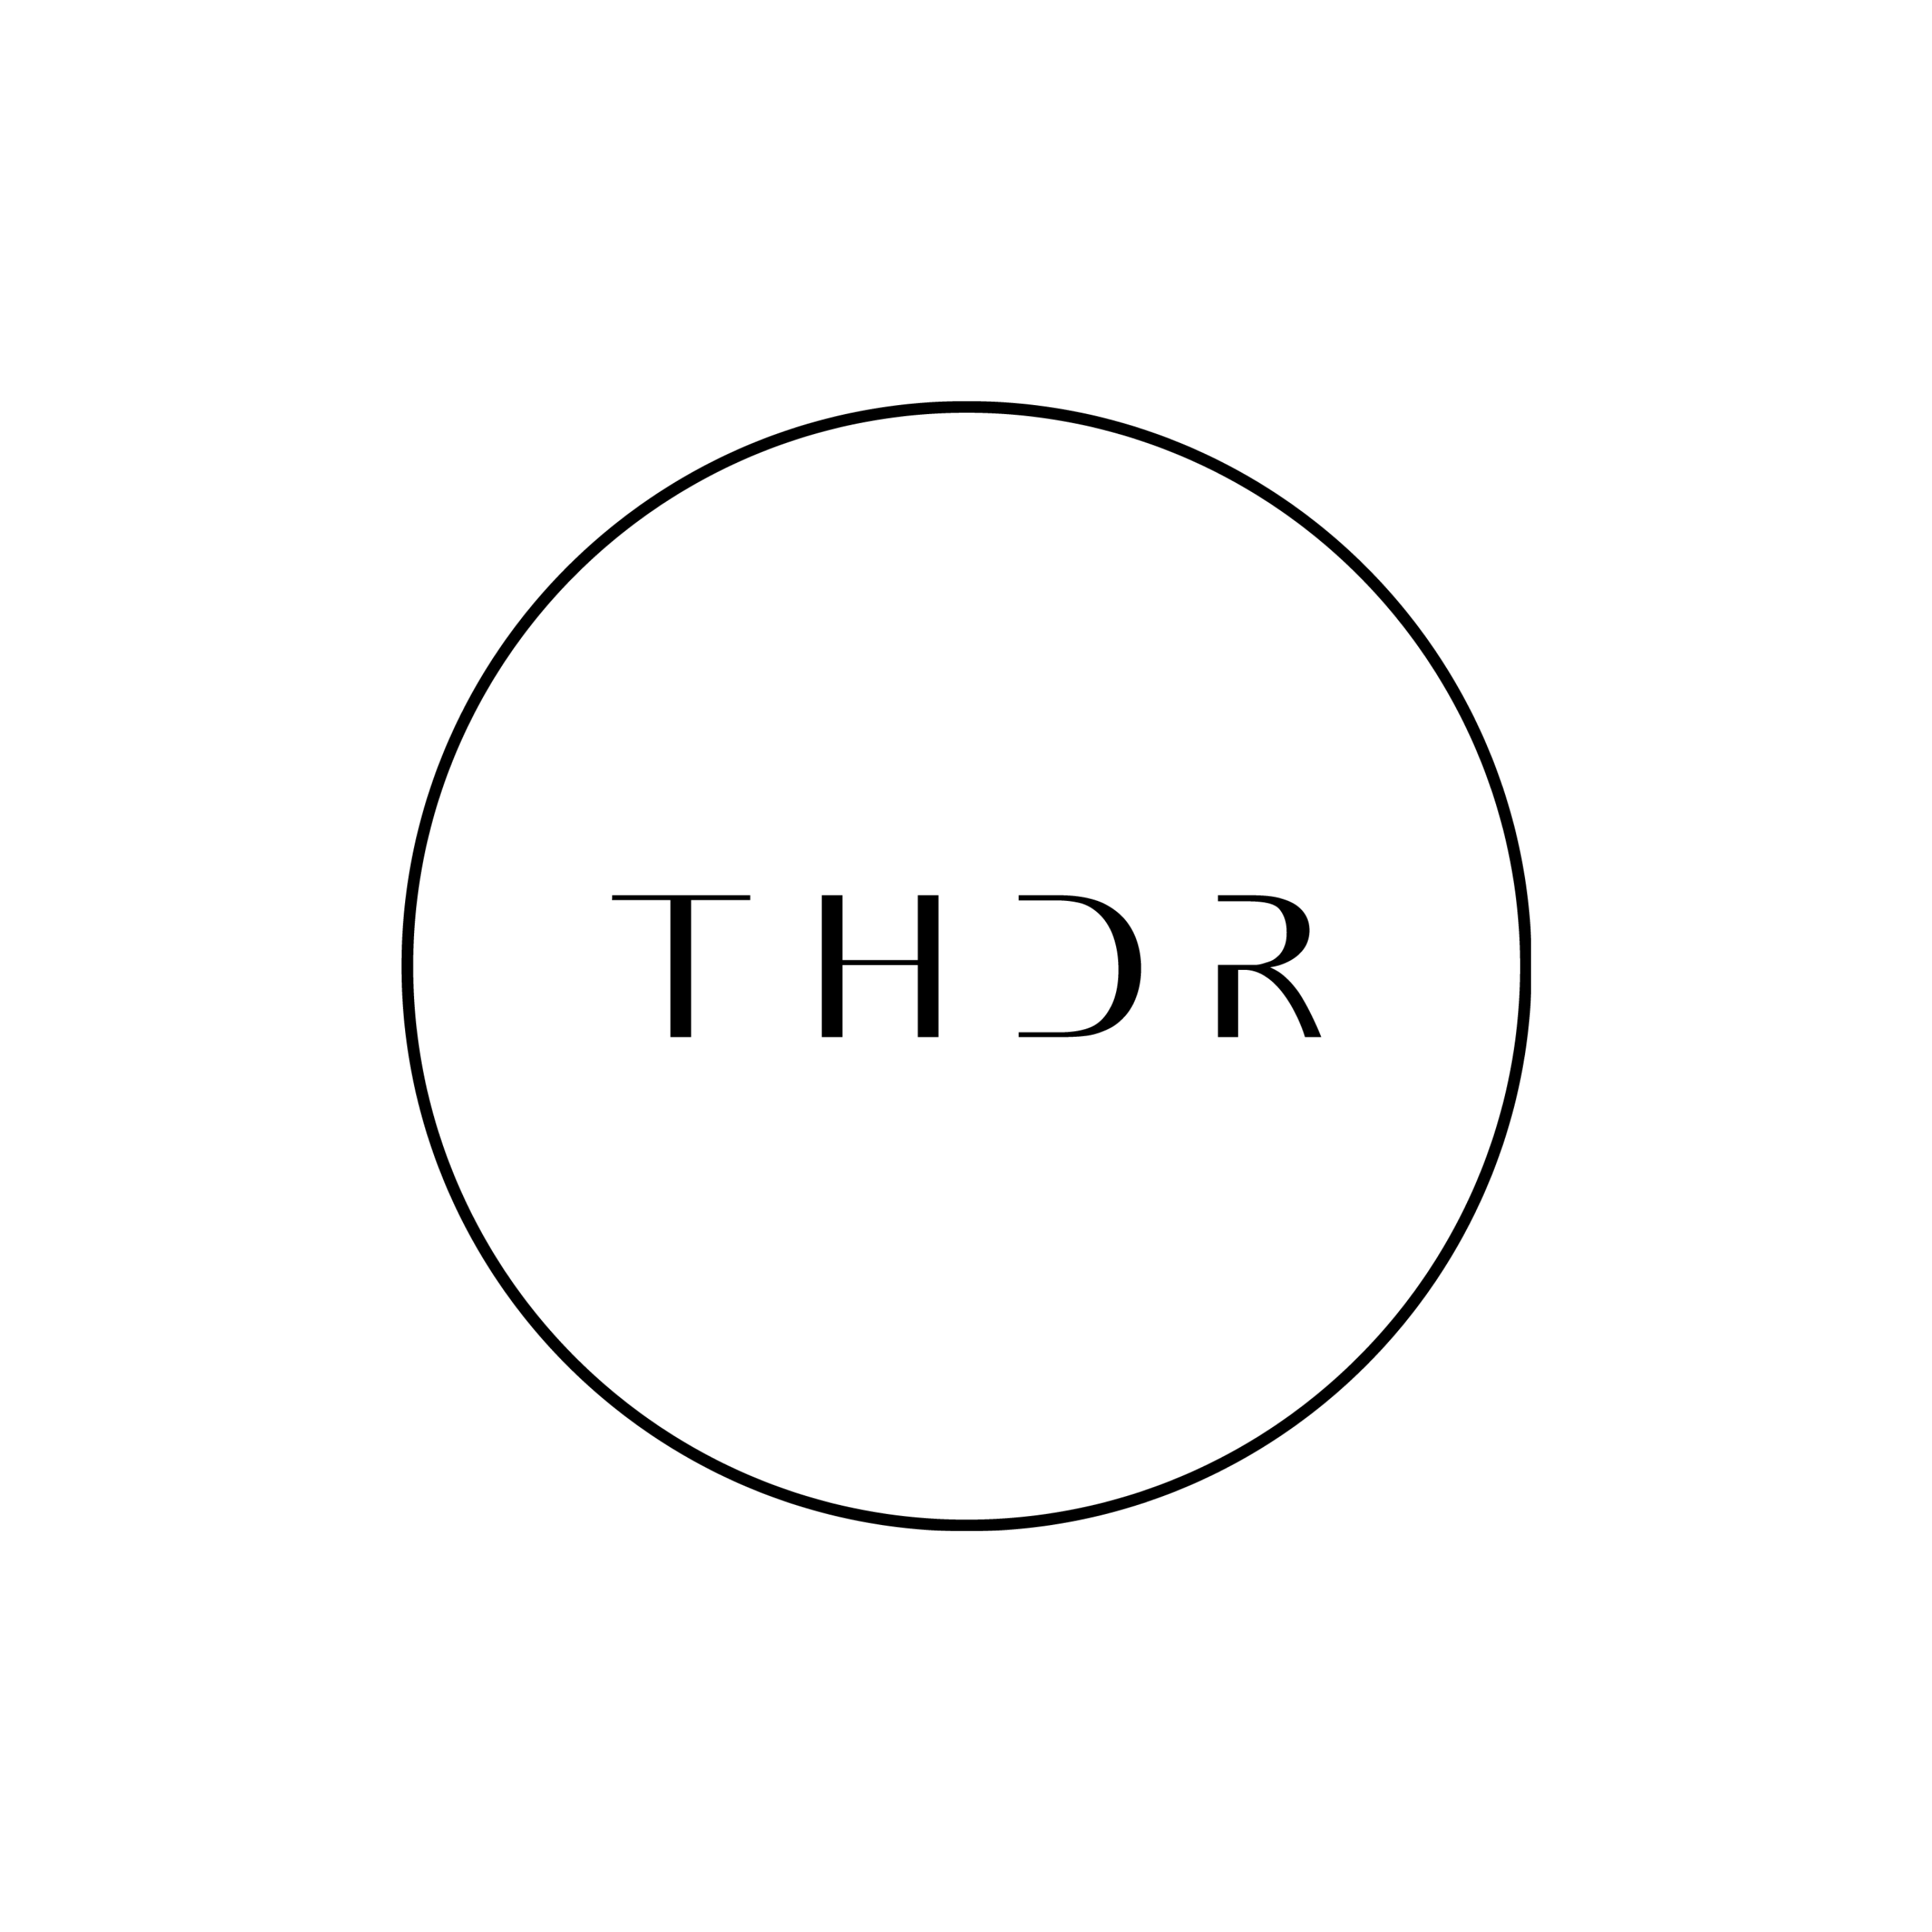 THDR Logo